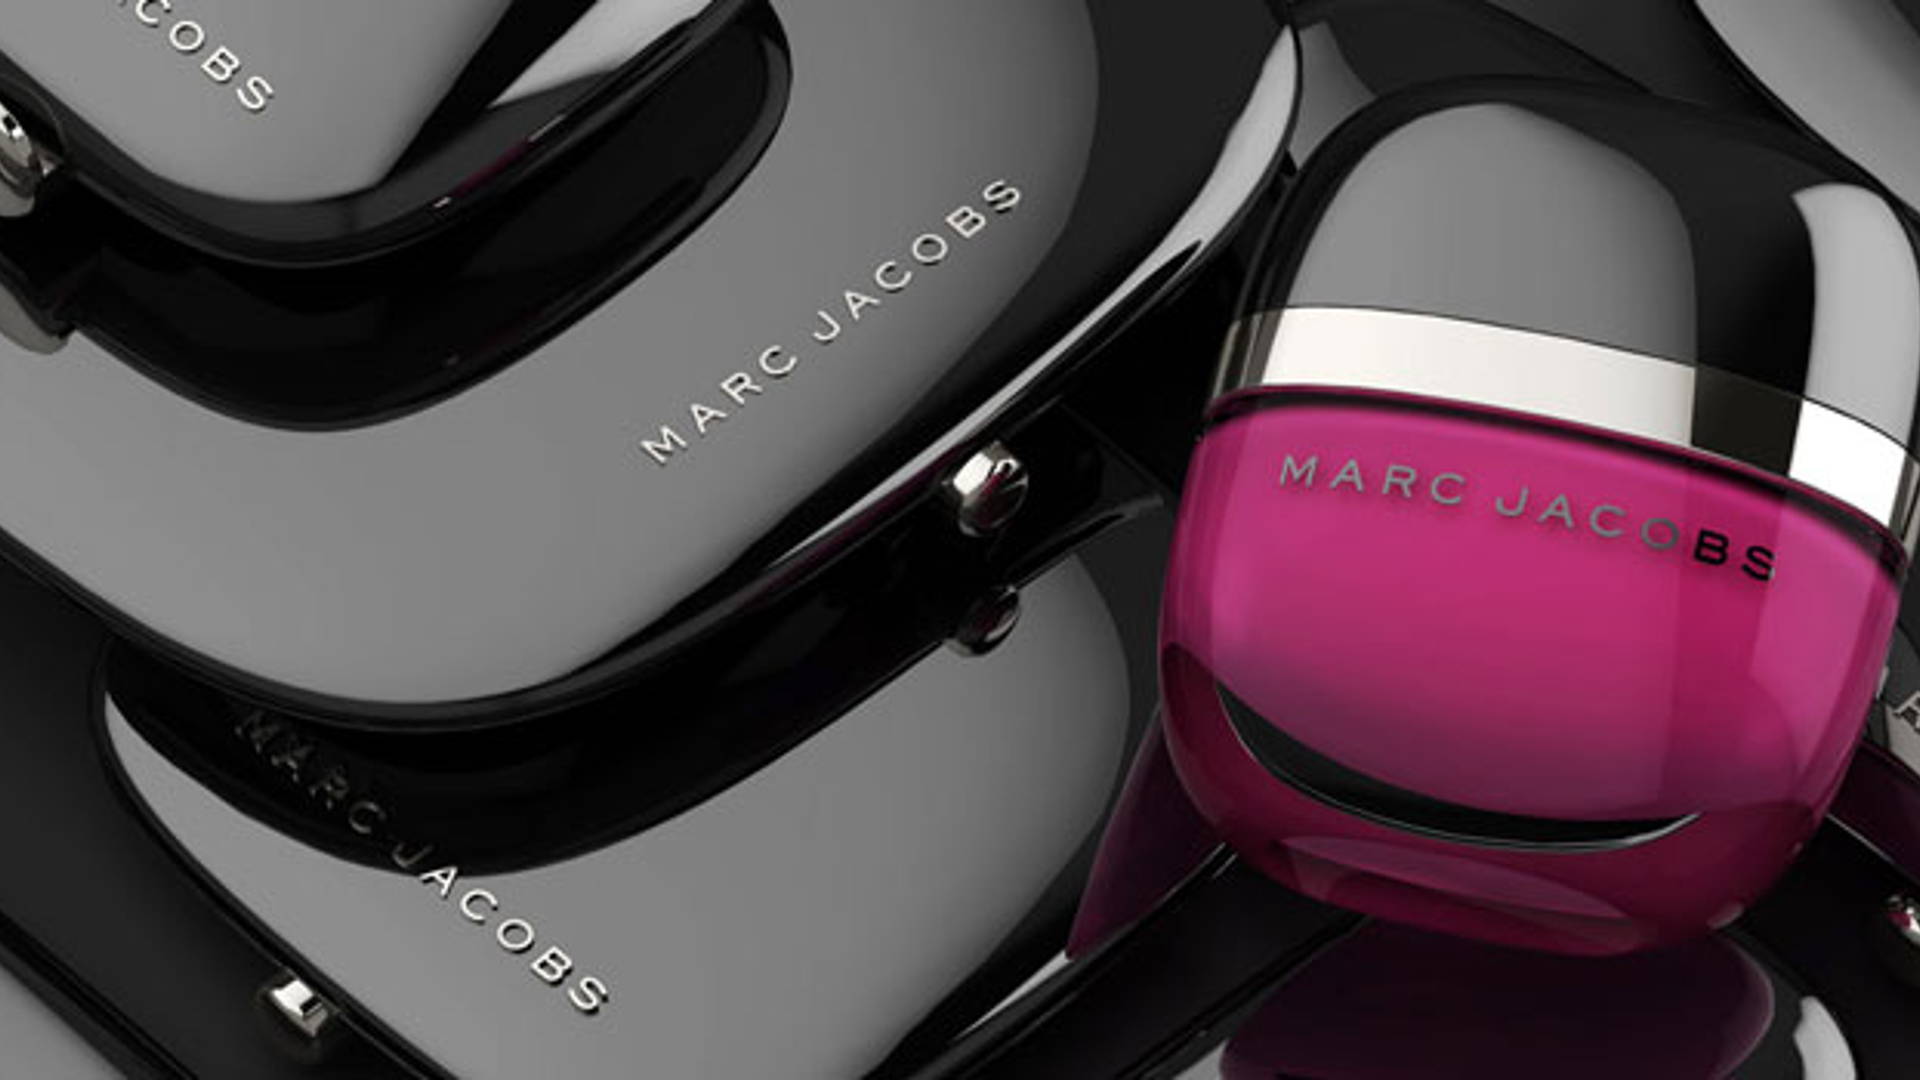 Converge Ny ankomst Cirkus Marc Jacobs Cosmetics | Dieline - Design, Branding & Packaging Inspiration